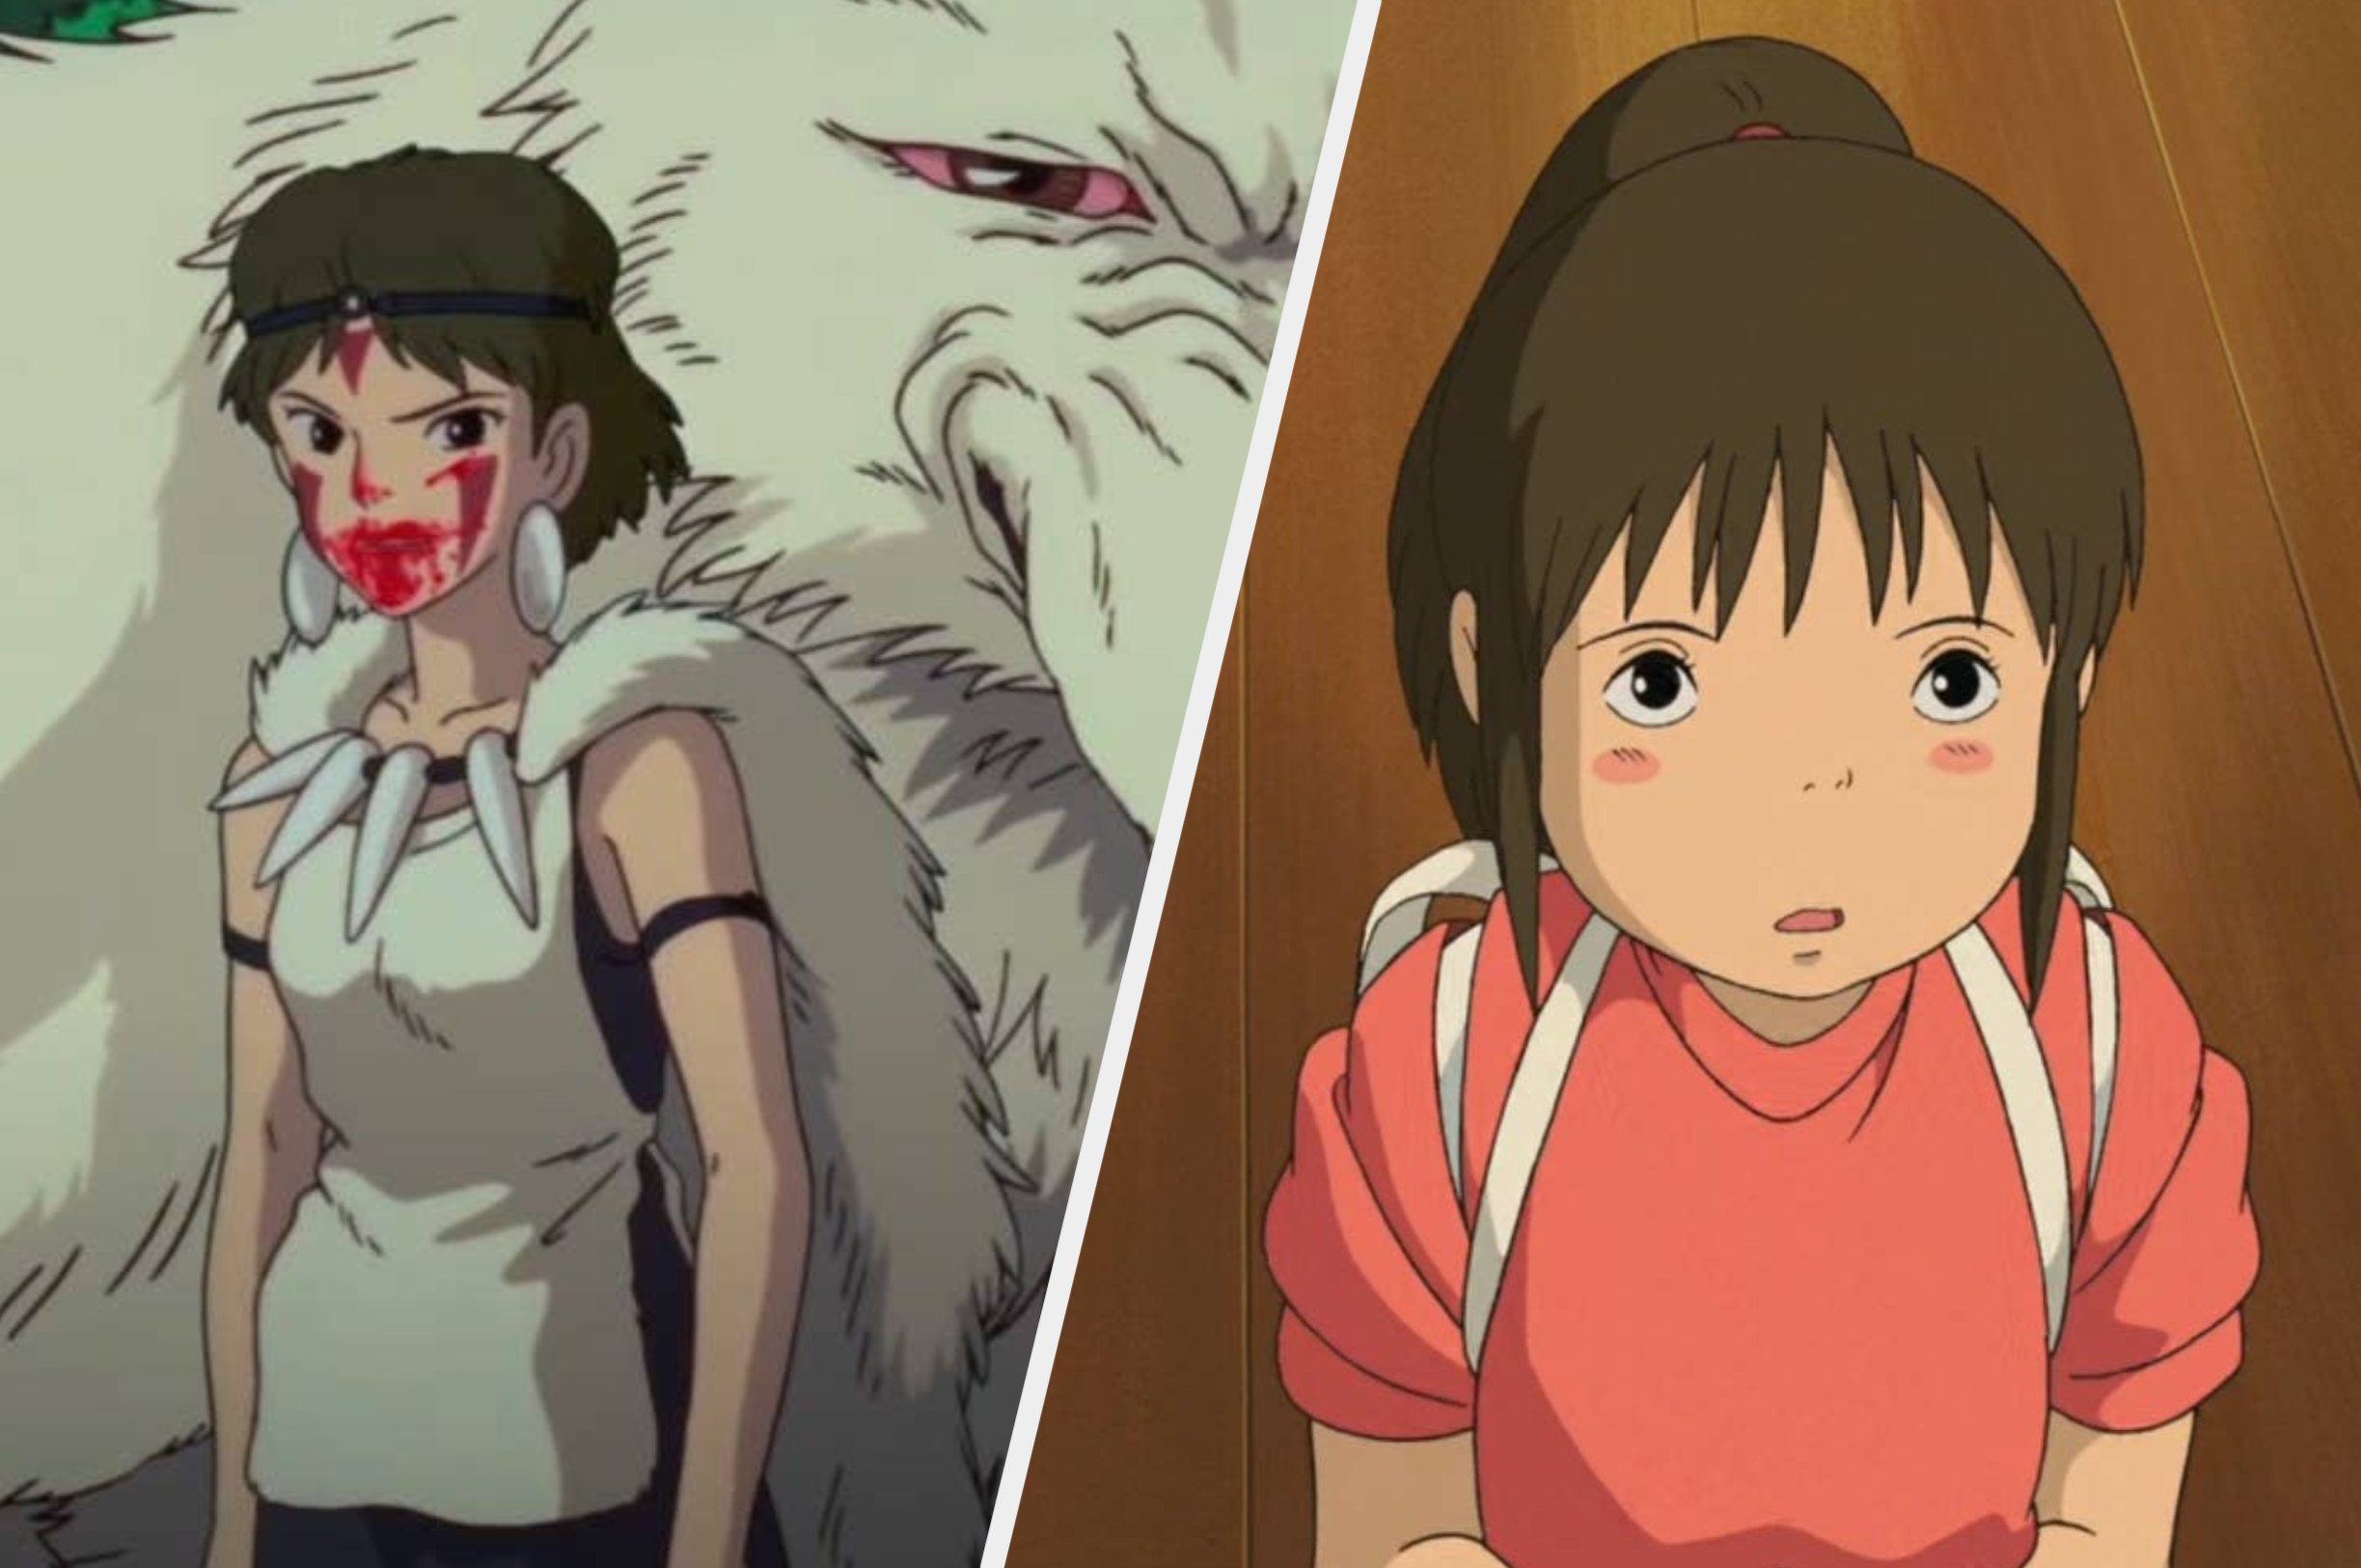 Grumpy Hayao Miyazaki quotes : r/anime